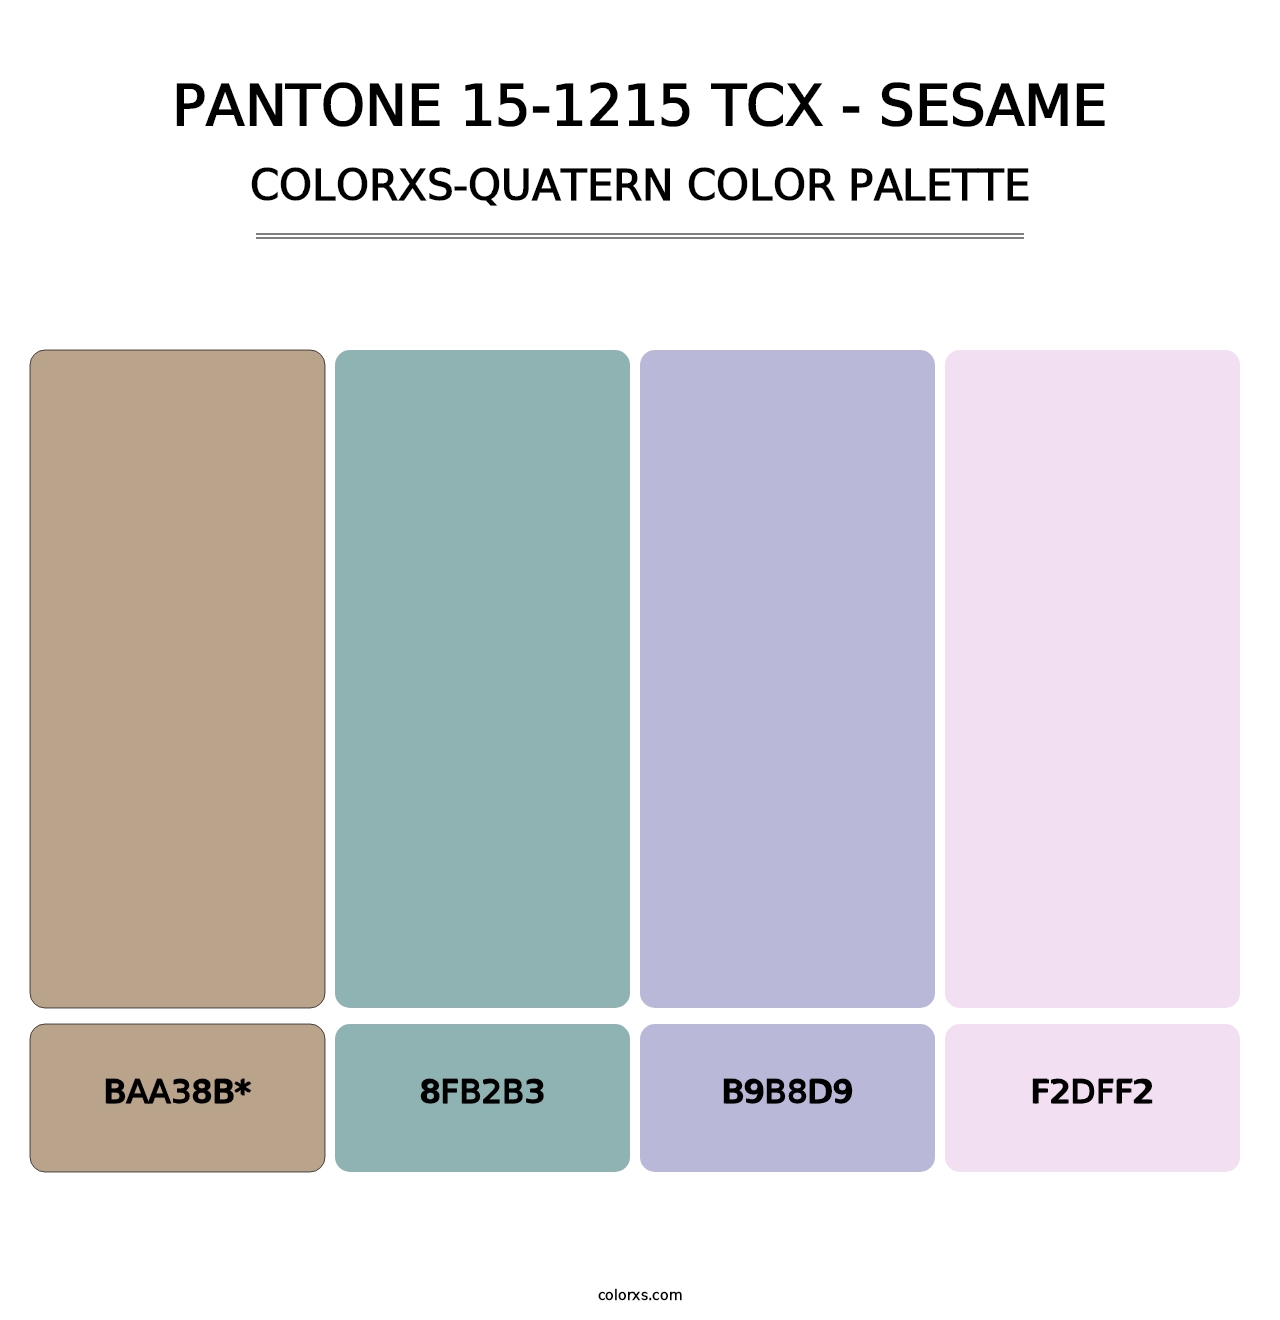 PANTONE 15-1215 TCX - Sesame - Colorxs Quatern Palette